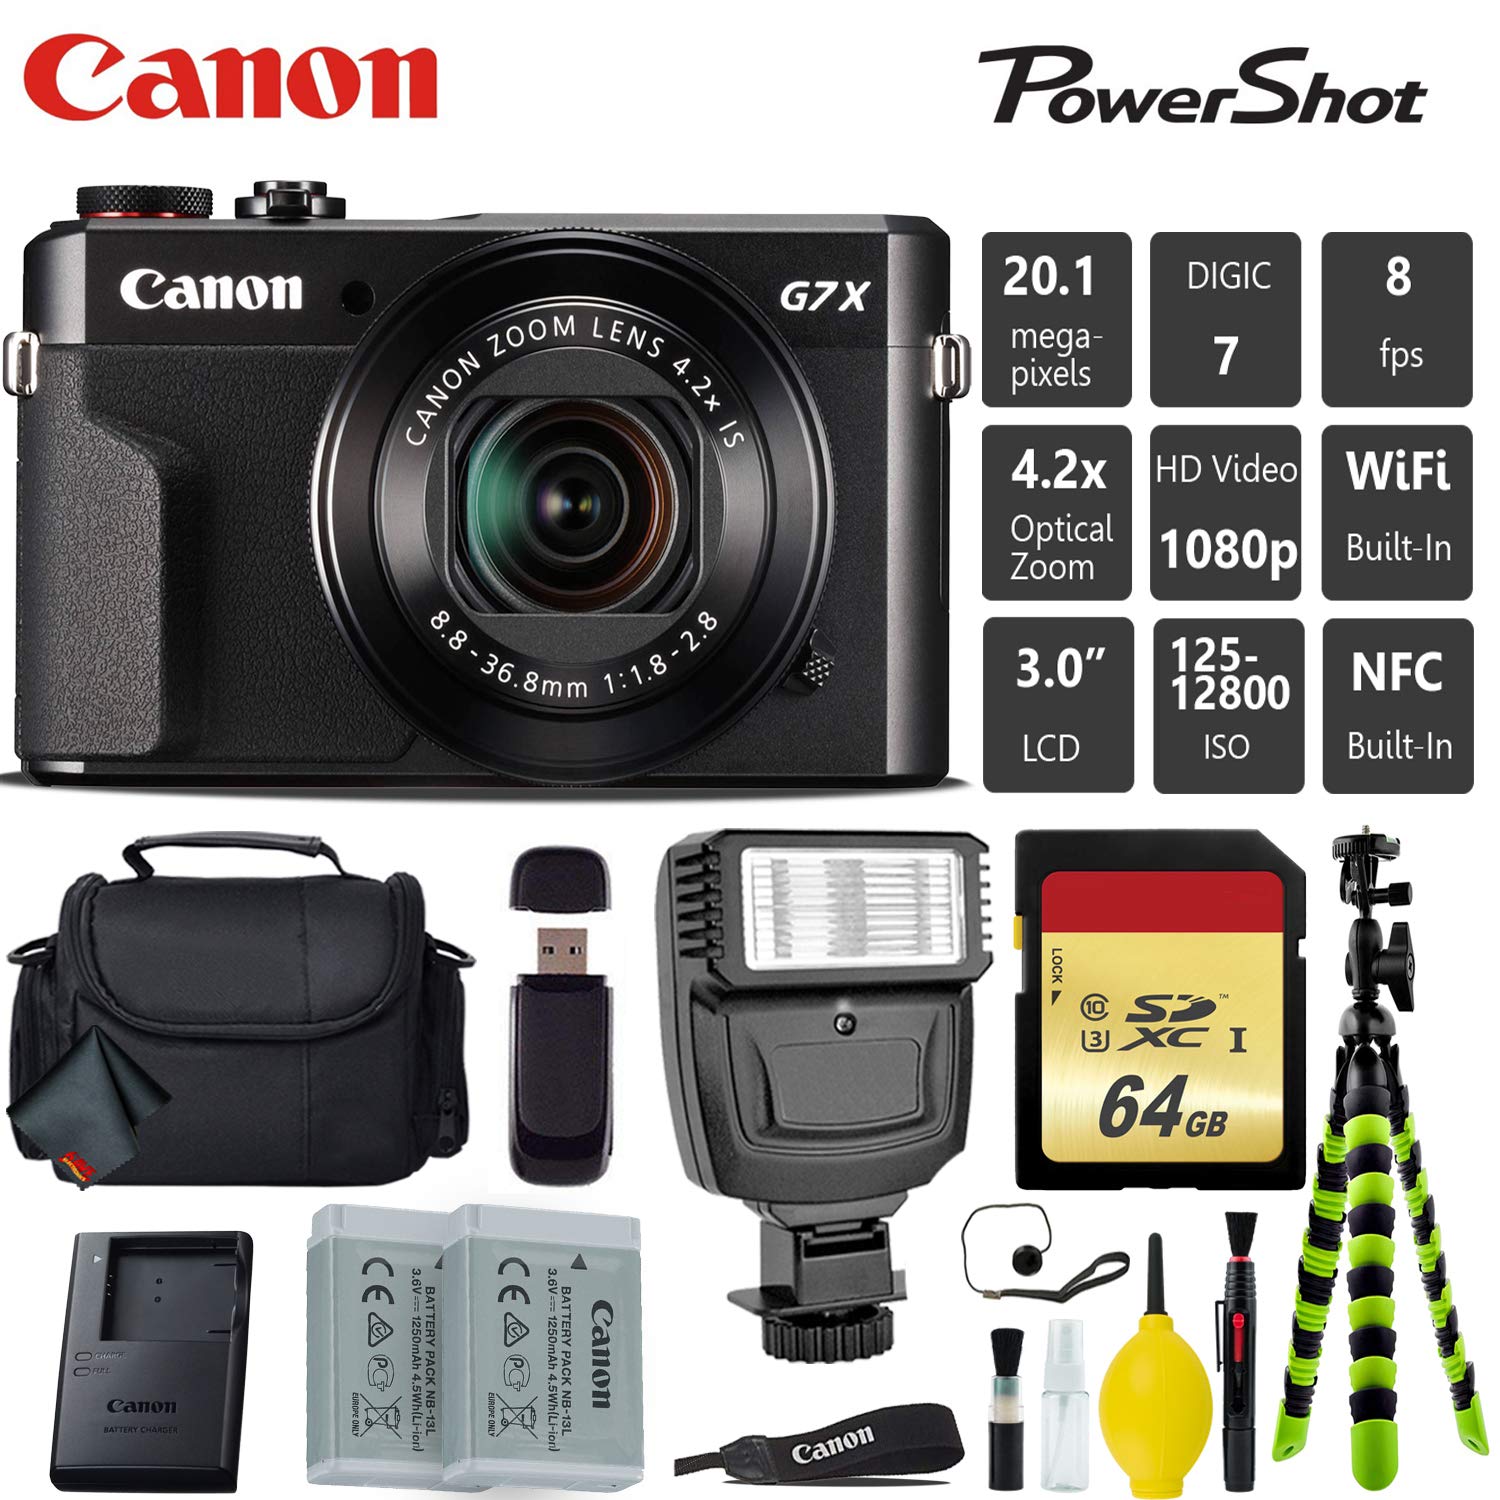 Canon PowerShot G7 X Mark II Point and Shoot Digital Camera + Extra Battery + Digital Flash + Camera Case + 64GB Class 1 Card Bundle